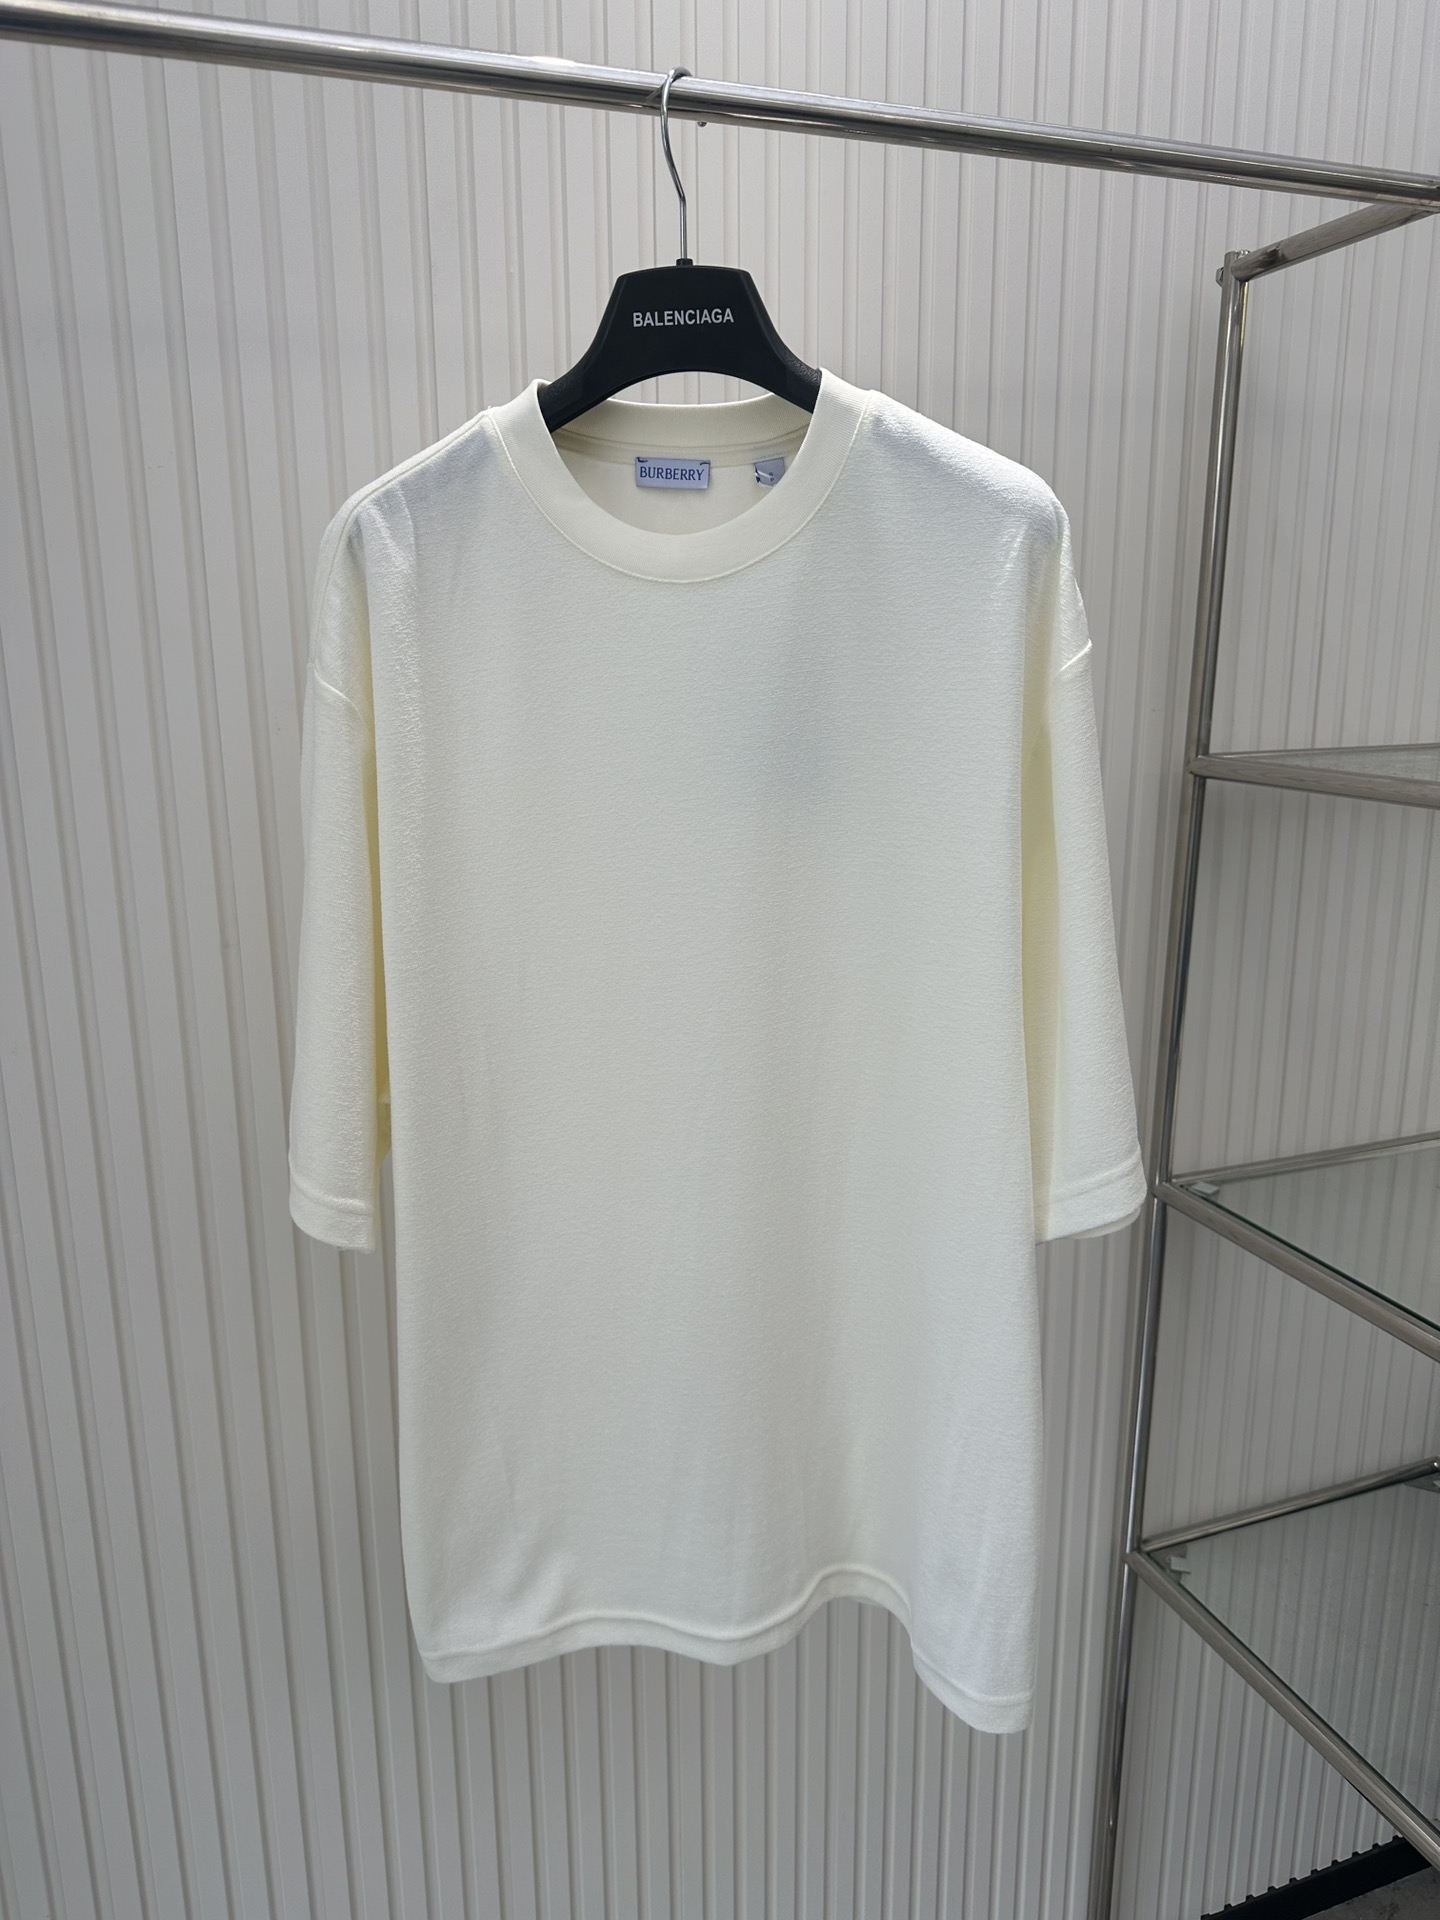 Burberry Clothing T-Shirt Cotton Short Sleeve